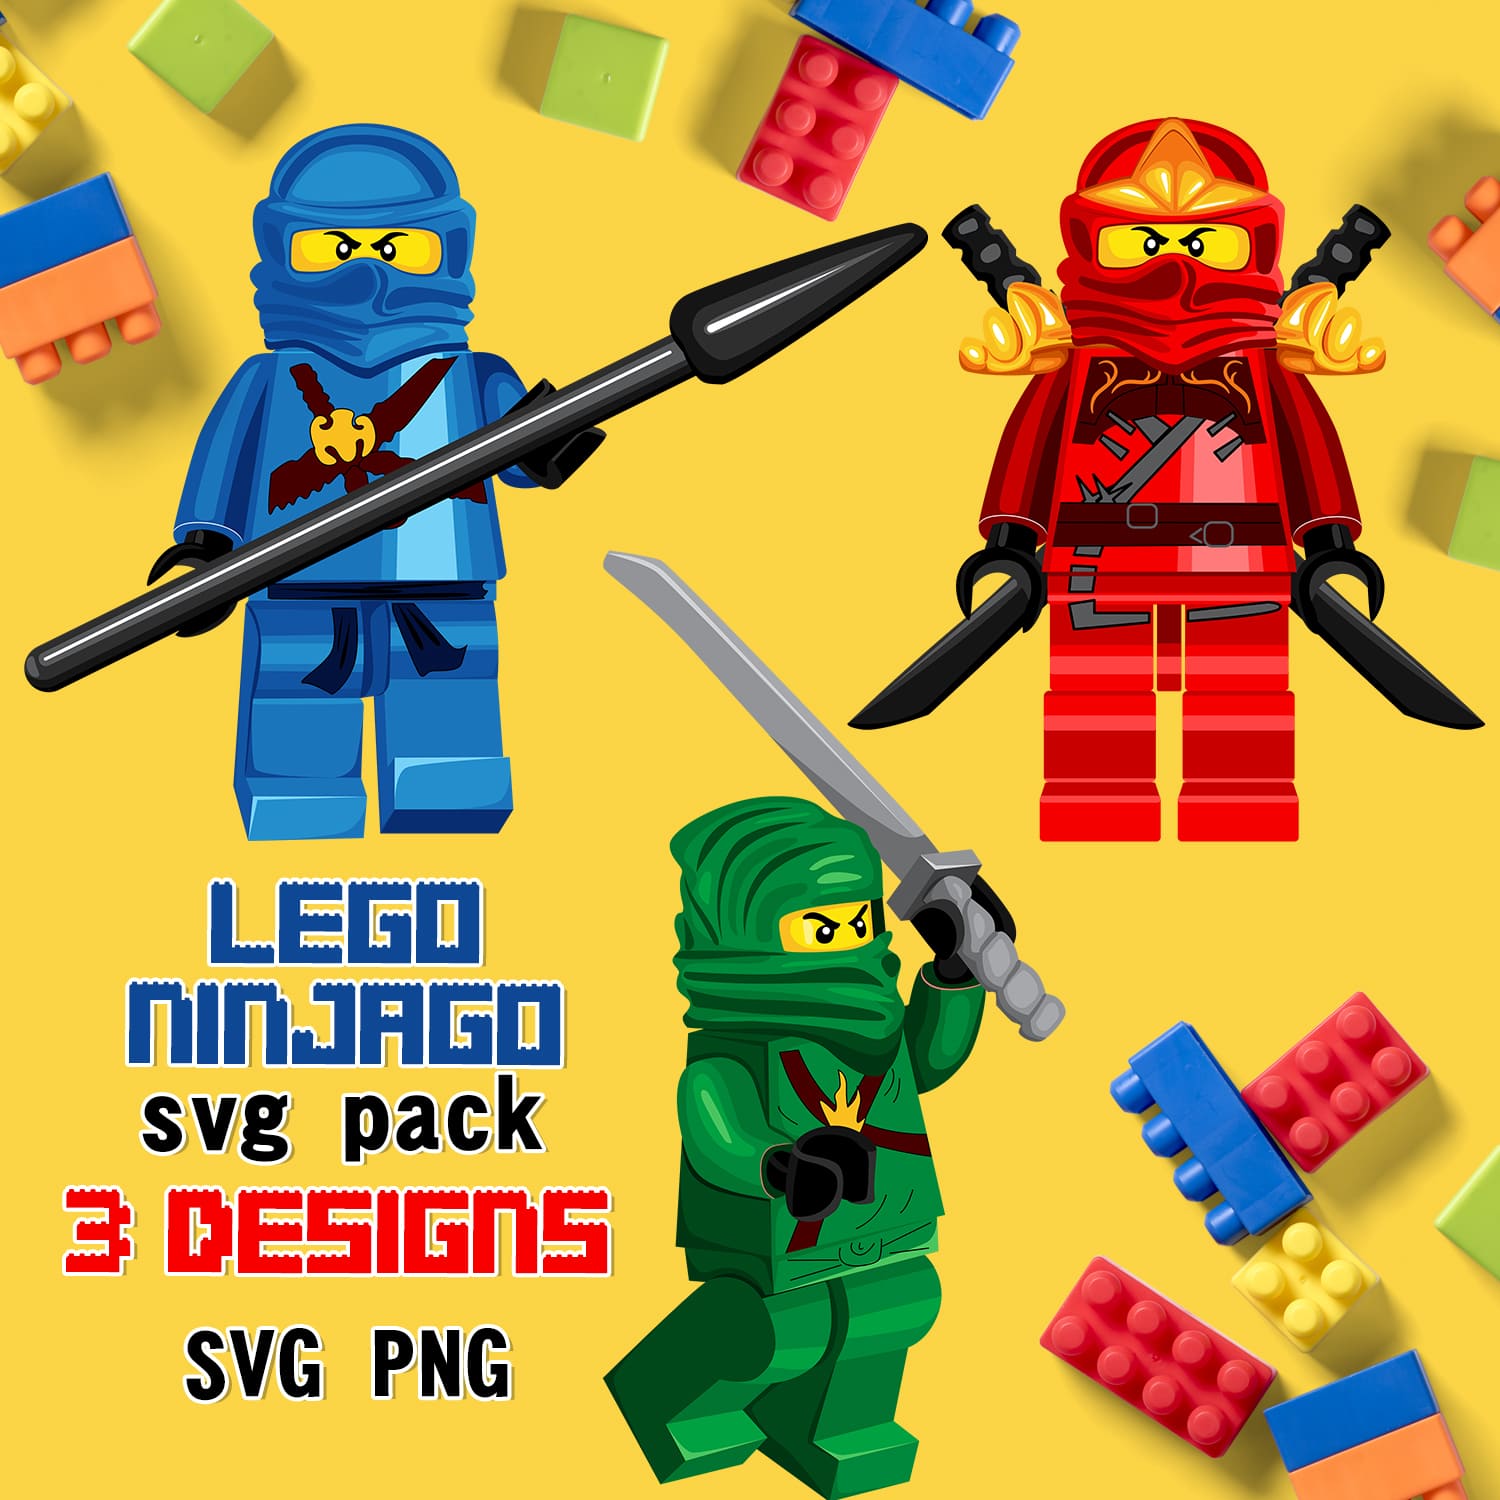 Lego ninjago svg - main image preview.